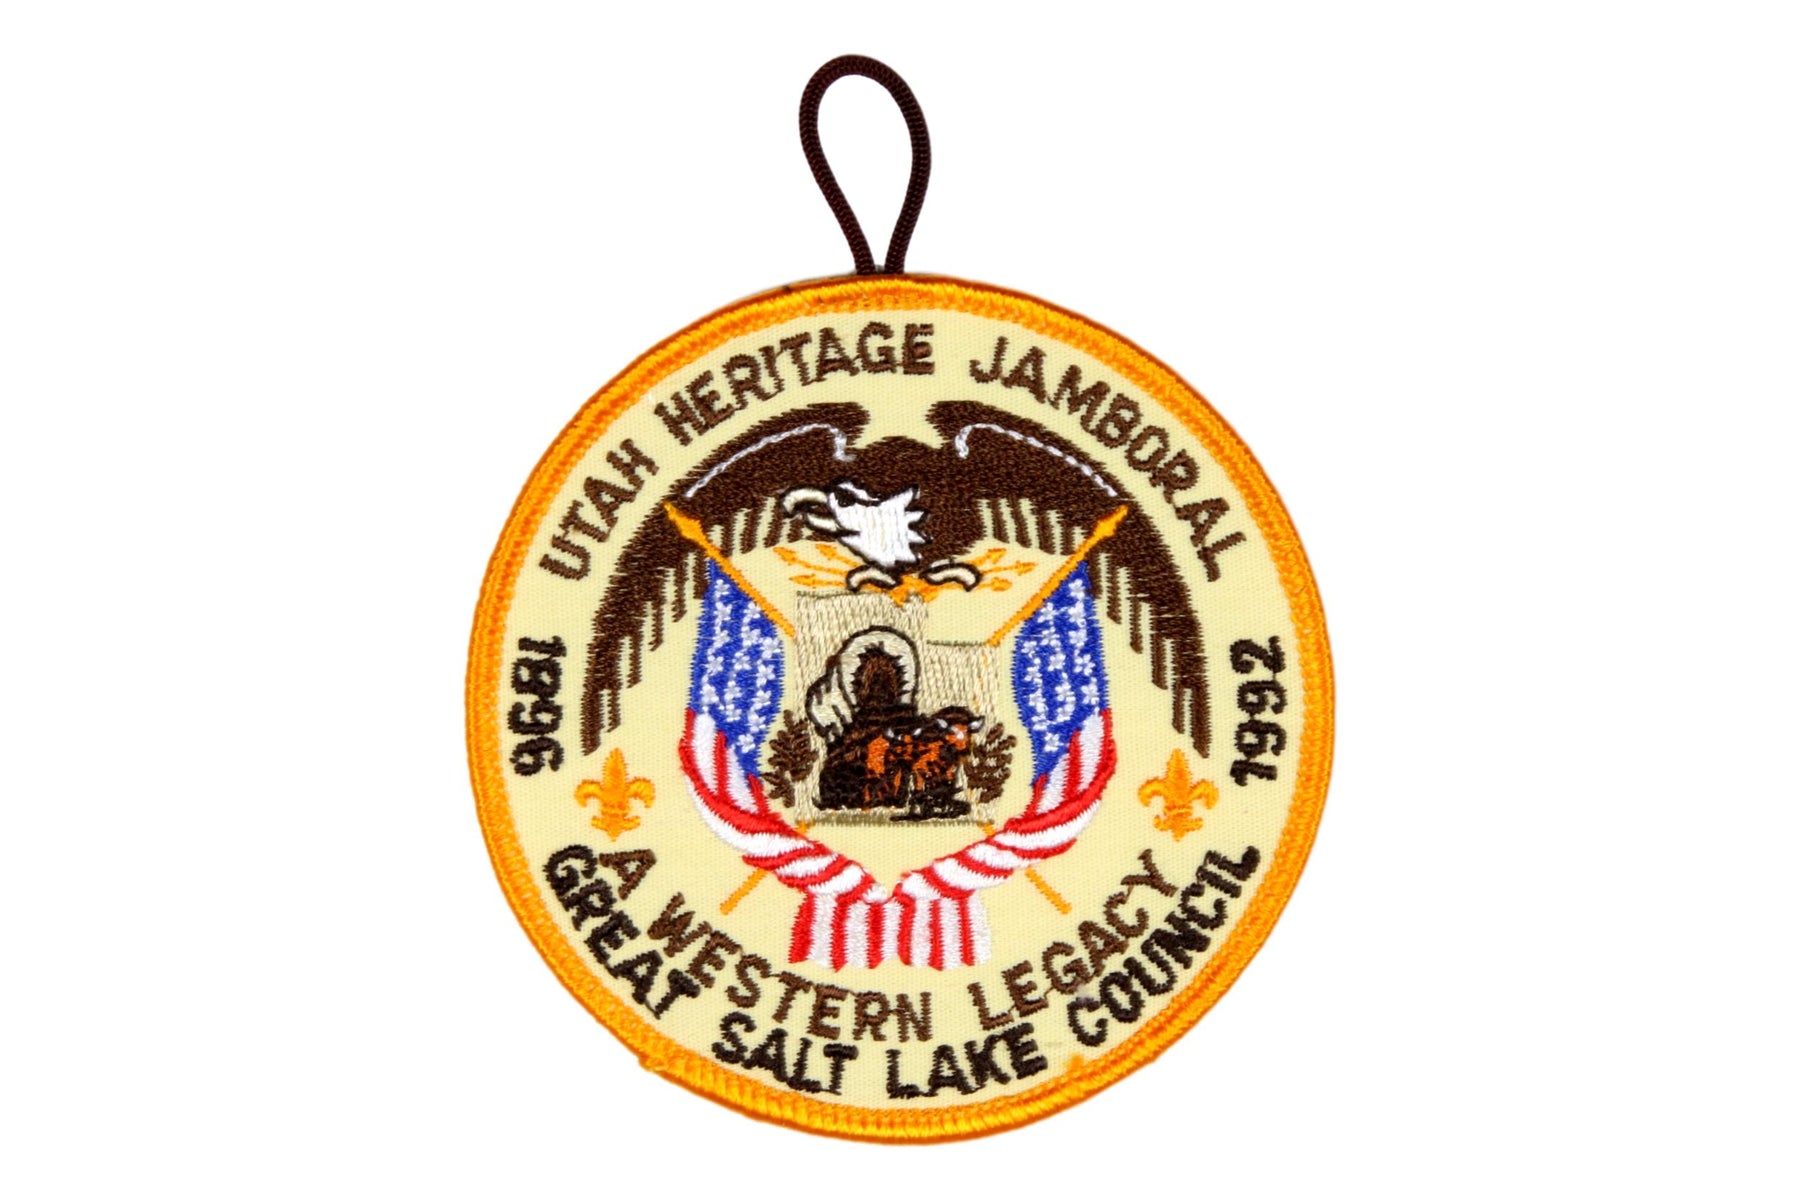 1992 Great Salt Lake Utah Heritage Jamboral Patch